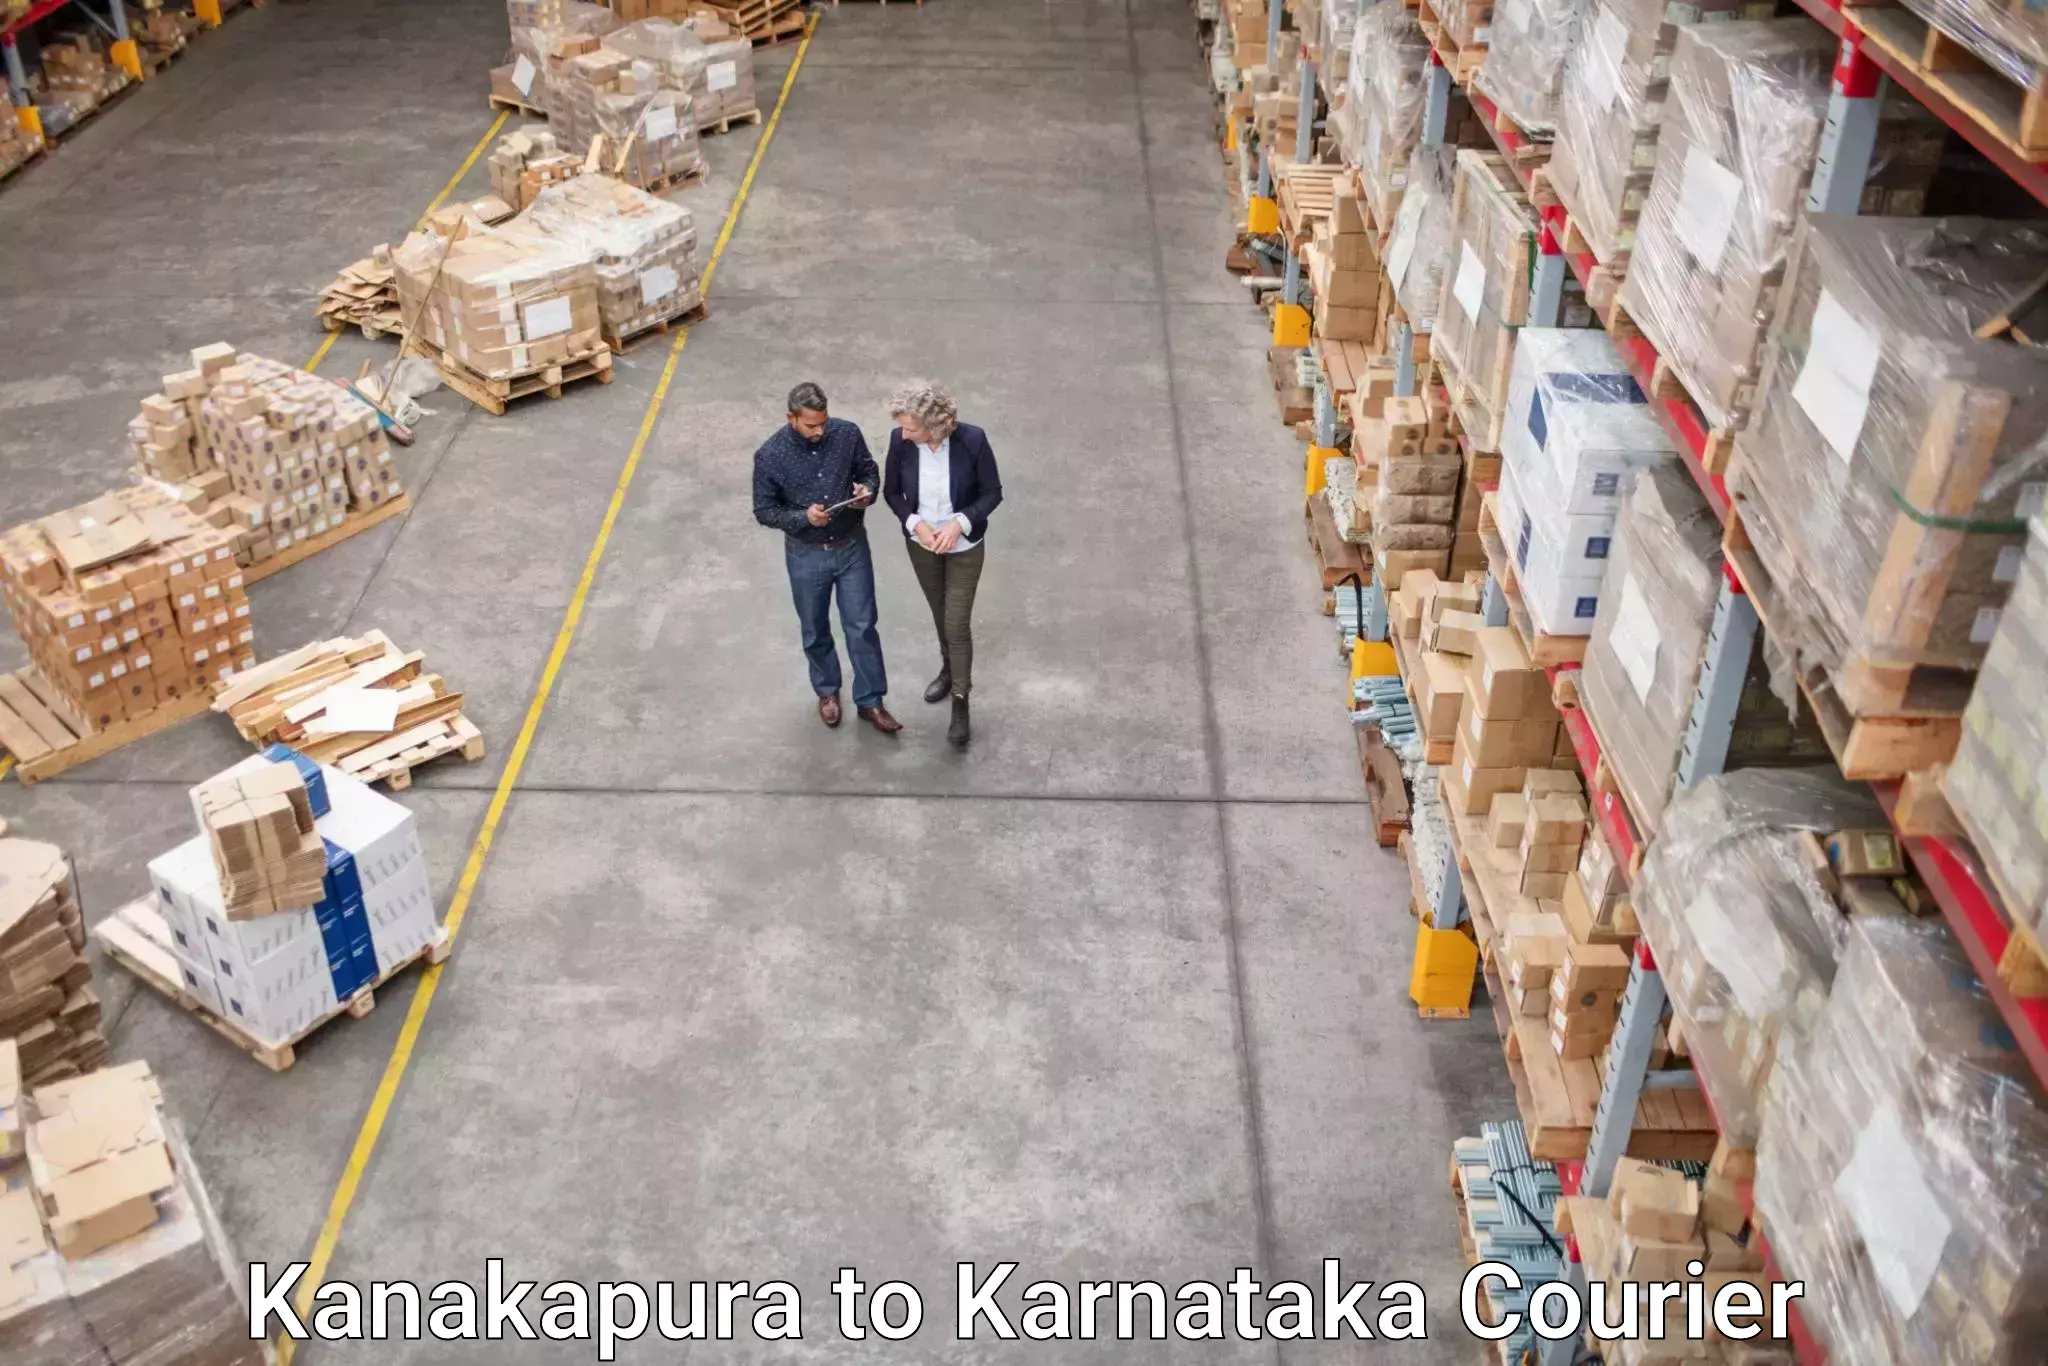 Global shipping networks Kanakapura to Yellapur